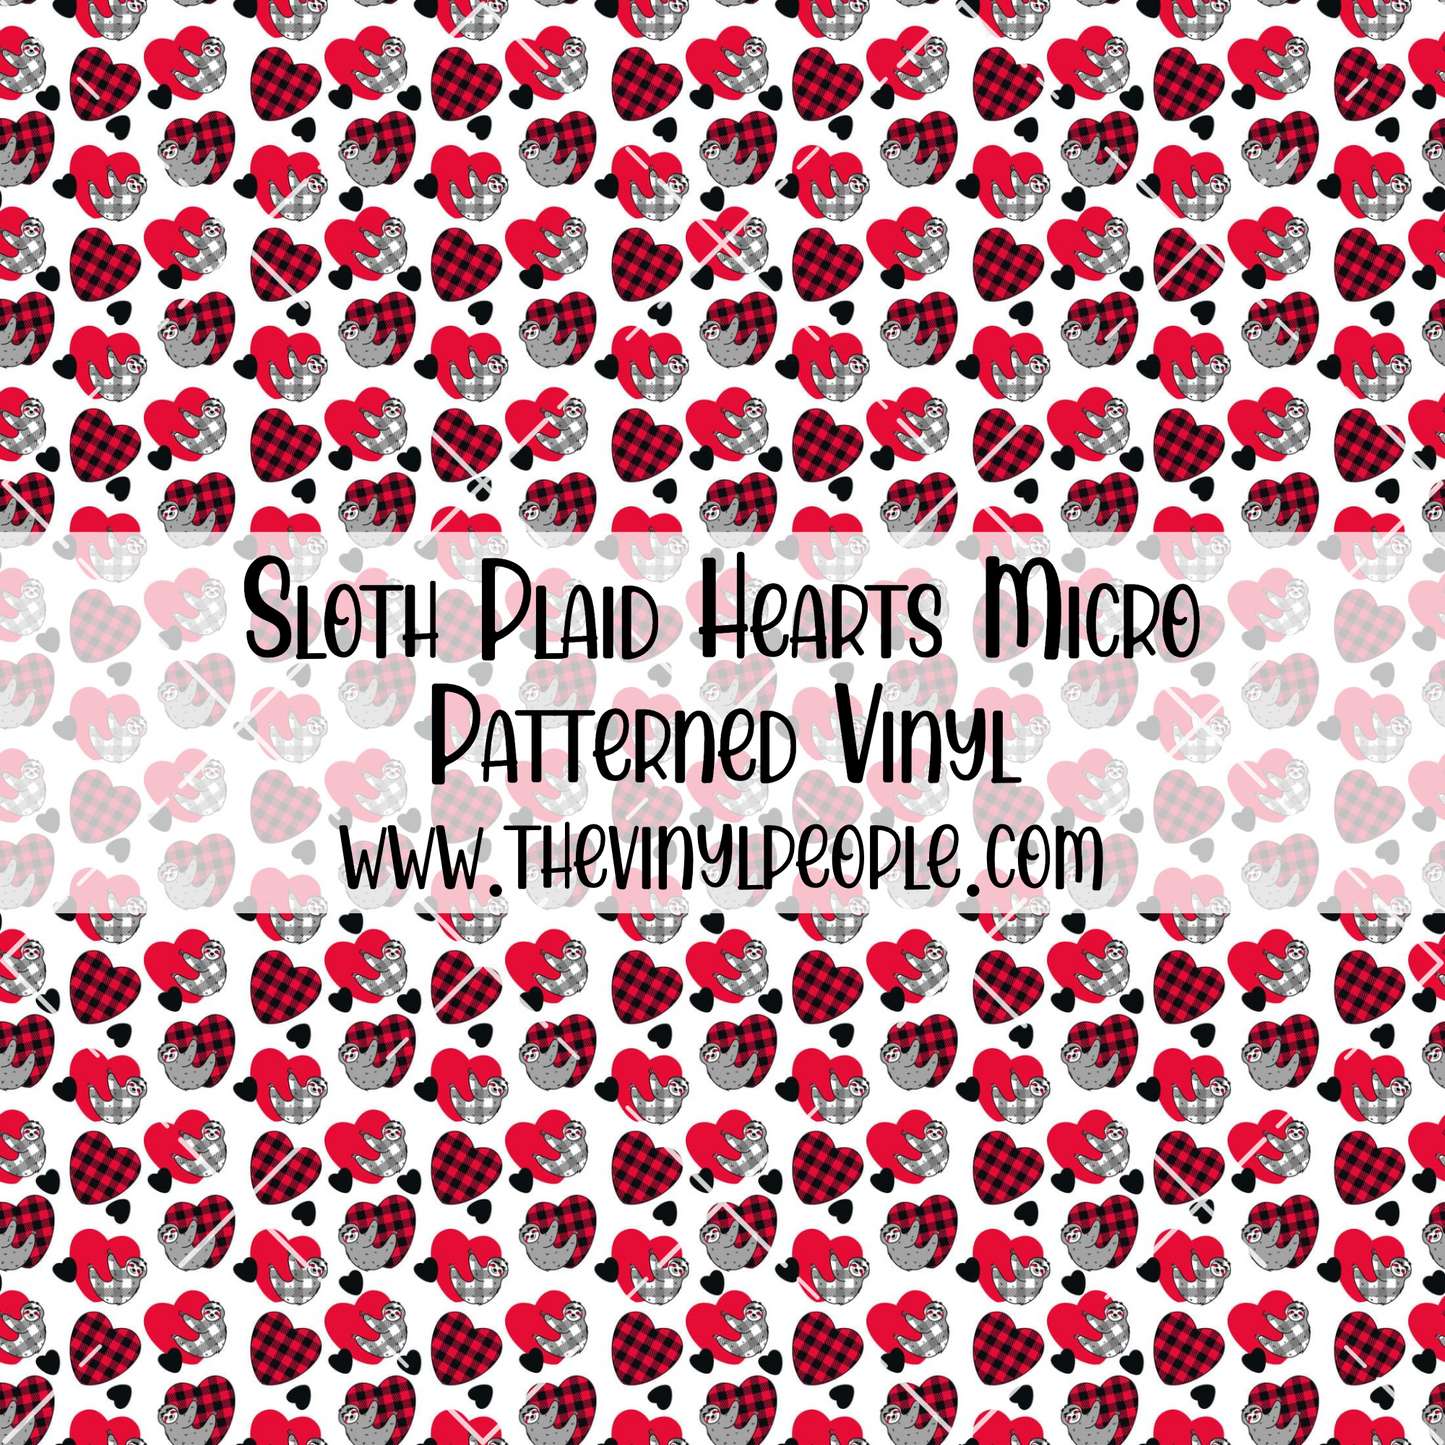 Sloth Plaid Hearts Patterned Vinyl